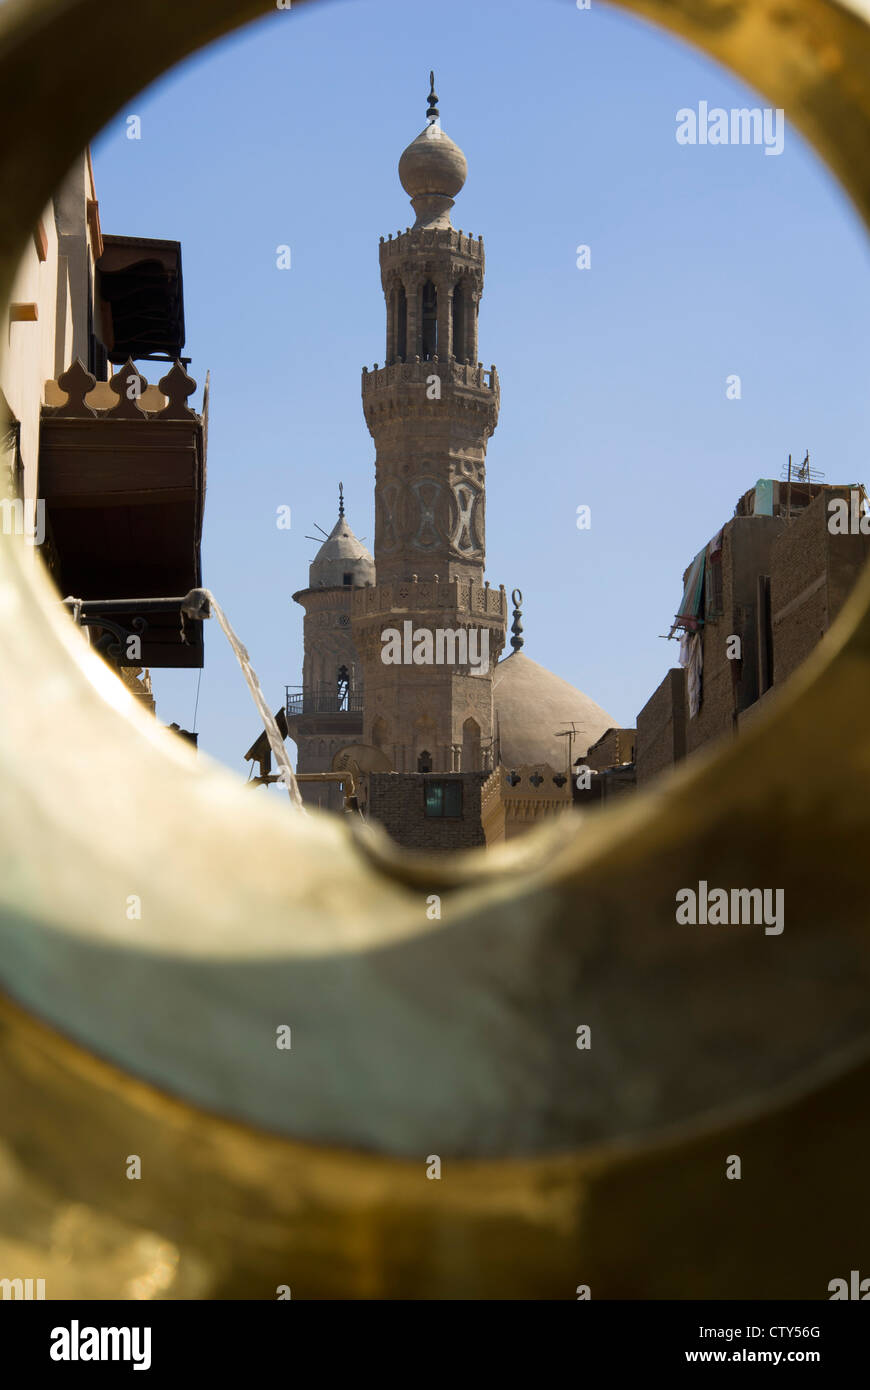 Minaret of Muhammad Ibn Qalawun Mosque, and Minaret of Madrasah of Sultan Bu Nassir, Khan El Khalili, Cairo, Egypt, Africa Stock Photo